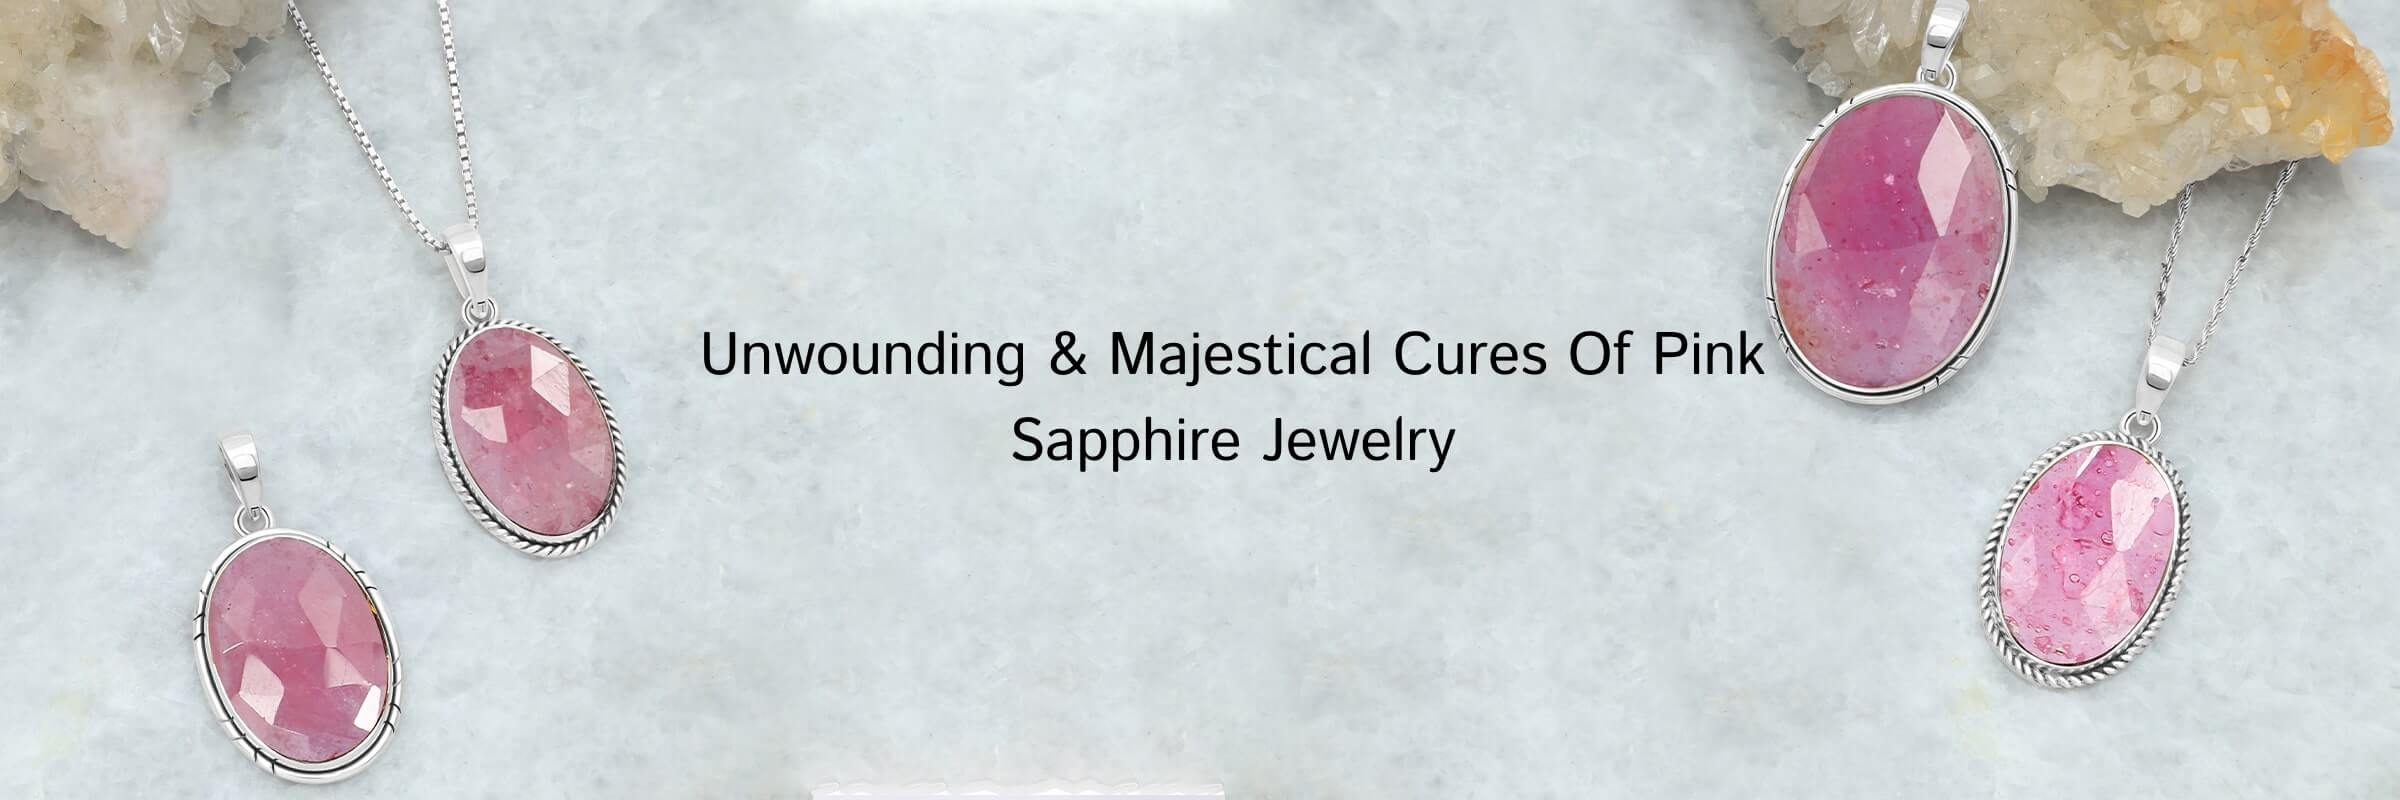 Healing Properties of Pink Sapphire